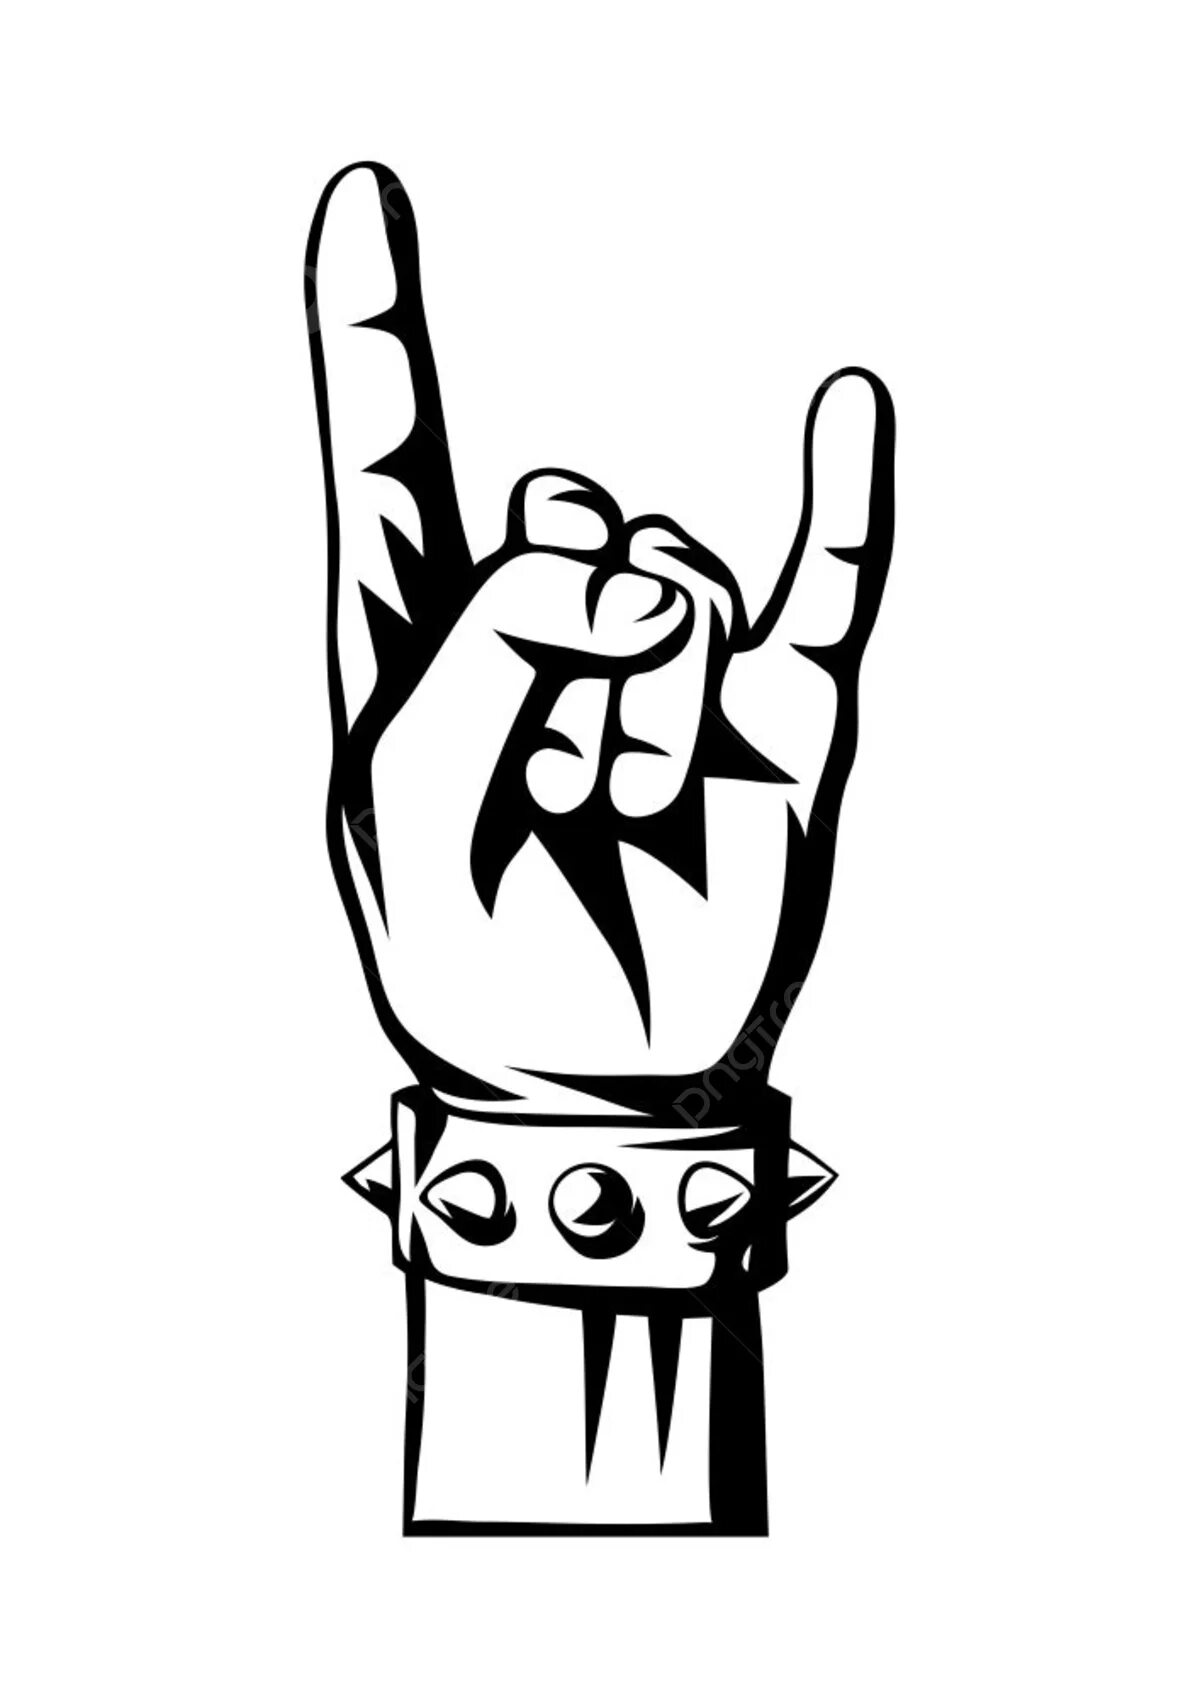 Metal hand. Рок коза. Рокерский знак рукой. Знак коза на пальцах. Знак рока.